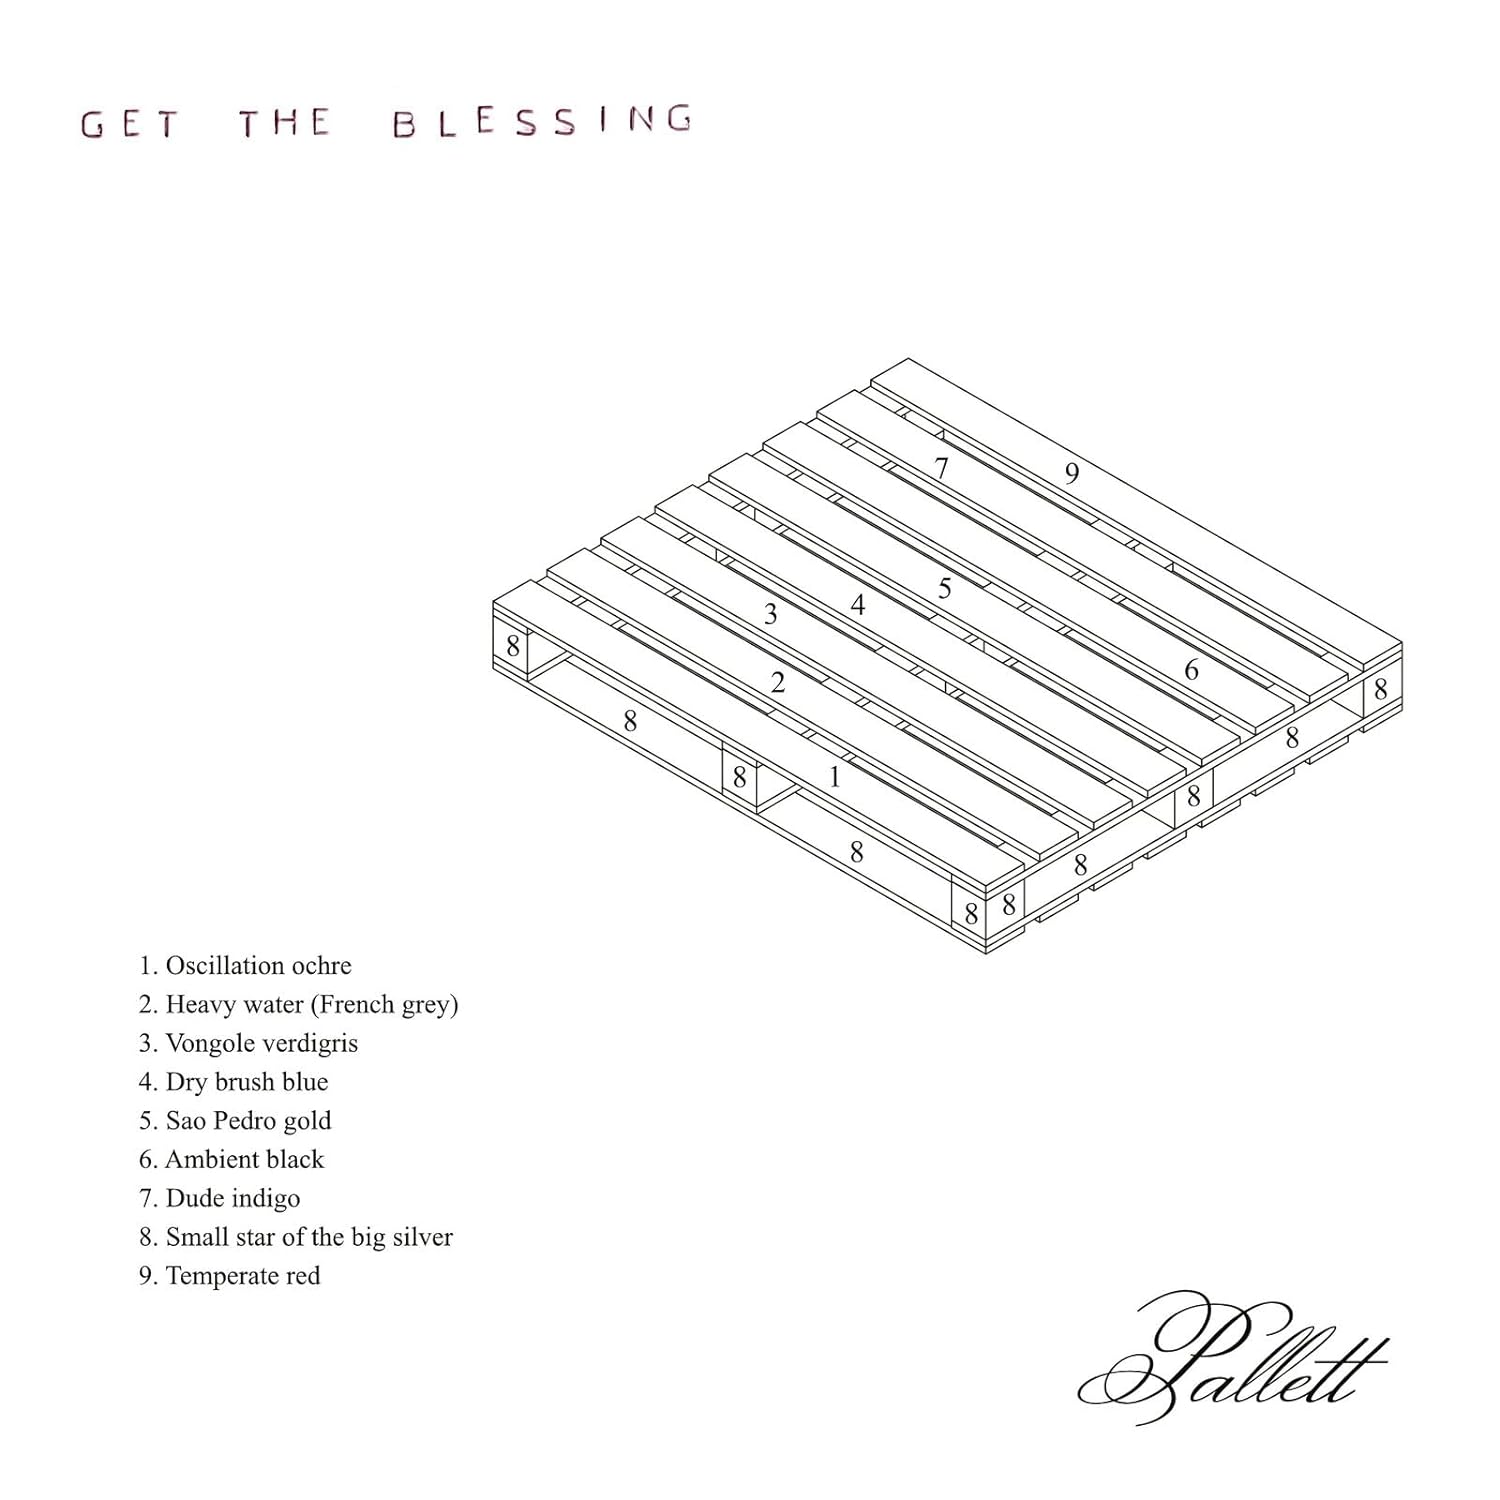 GET THE BLESSING - Pallett cover 